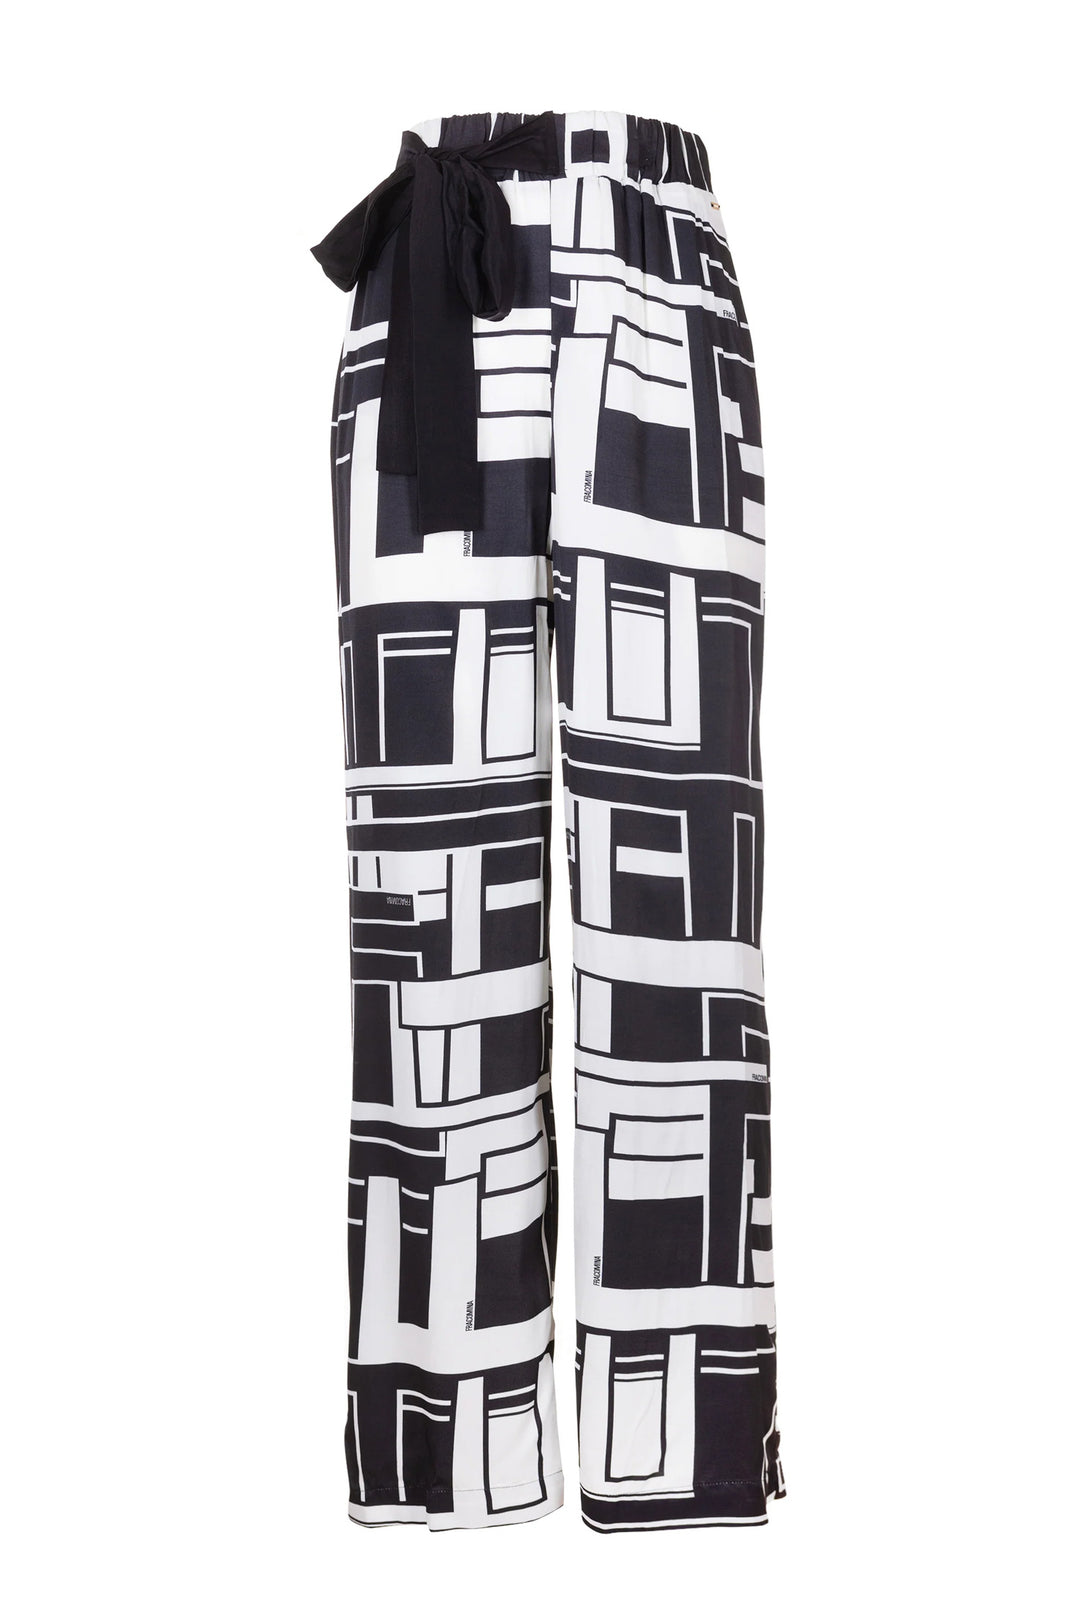 FRACOMINA Pantalone ampio a vita alta in fantasia geometrica bianca e nera - Mancinelli 1954